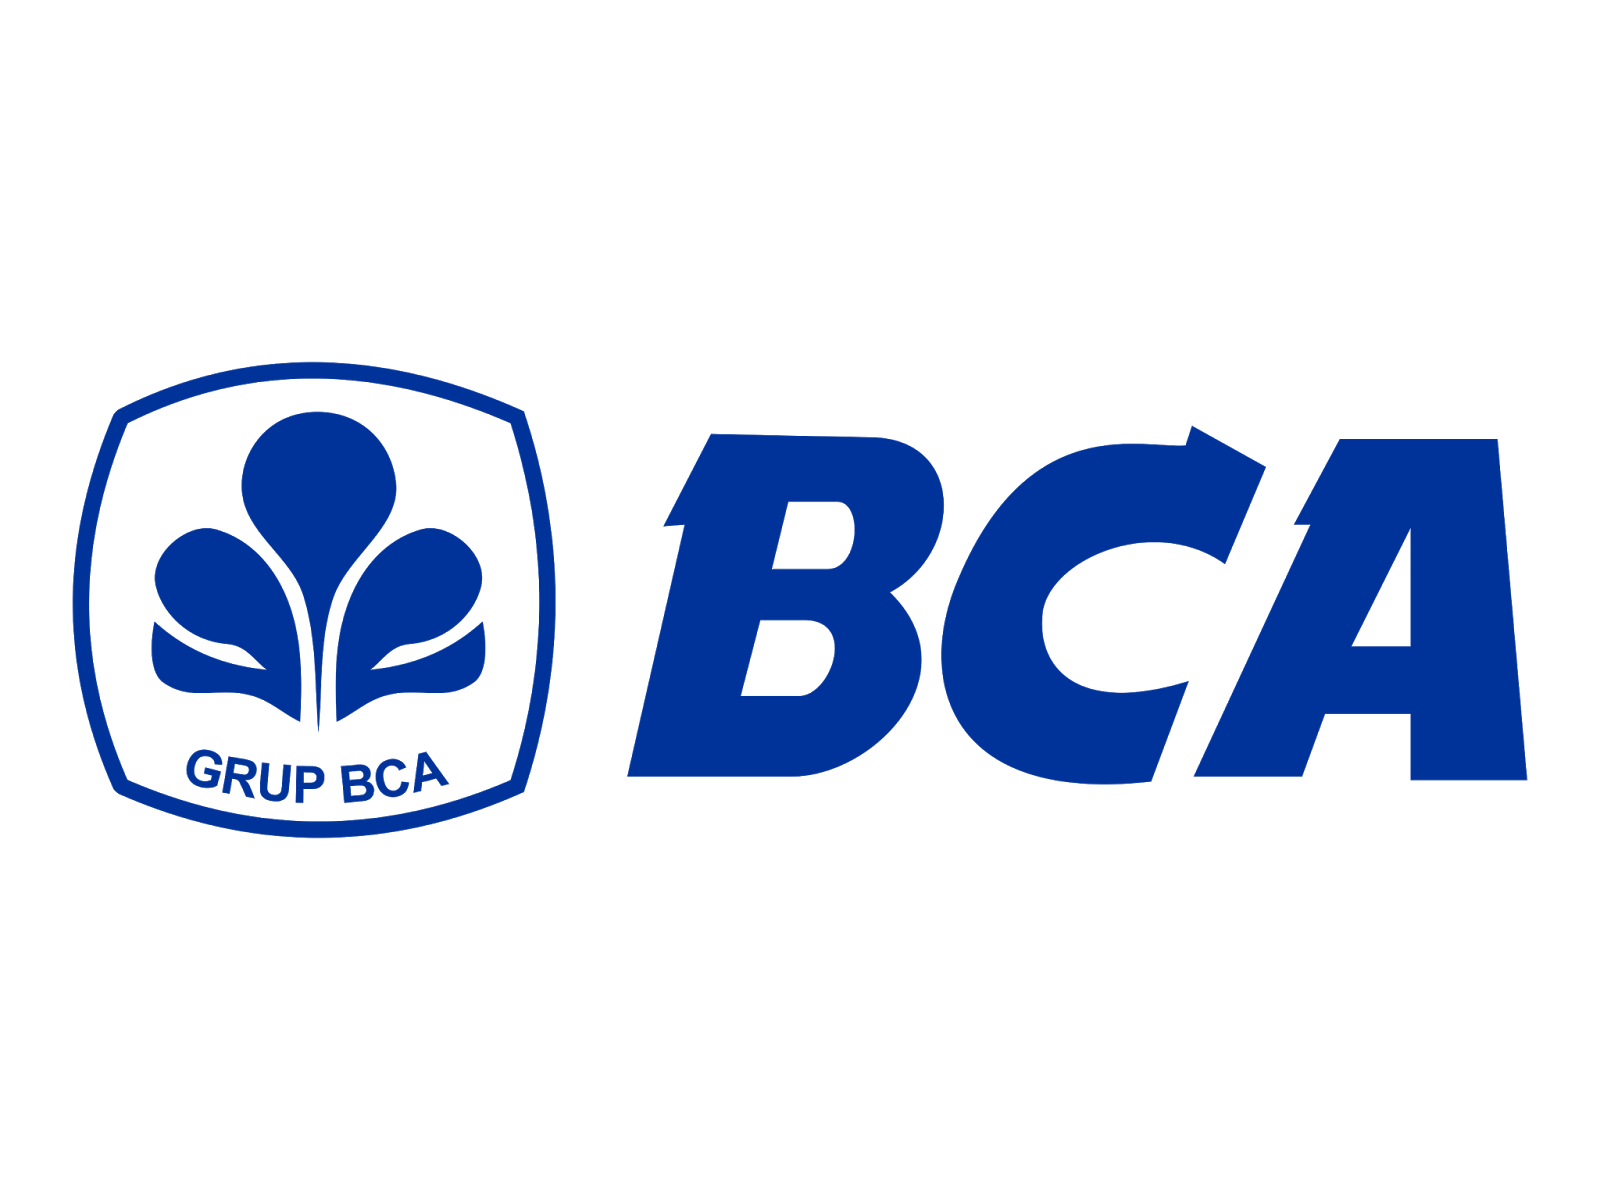 kisspng-bank-central-asia-logo-bca-finance-business-logo-bank-central-asia-bca-format-cdr-amp-pn-5b63687e68a795.3184526615332414704287 (1)